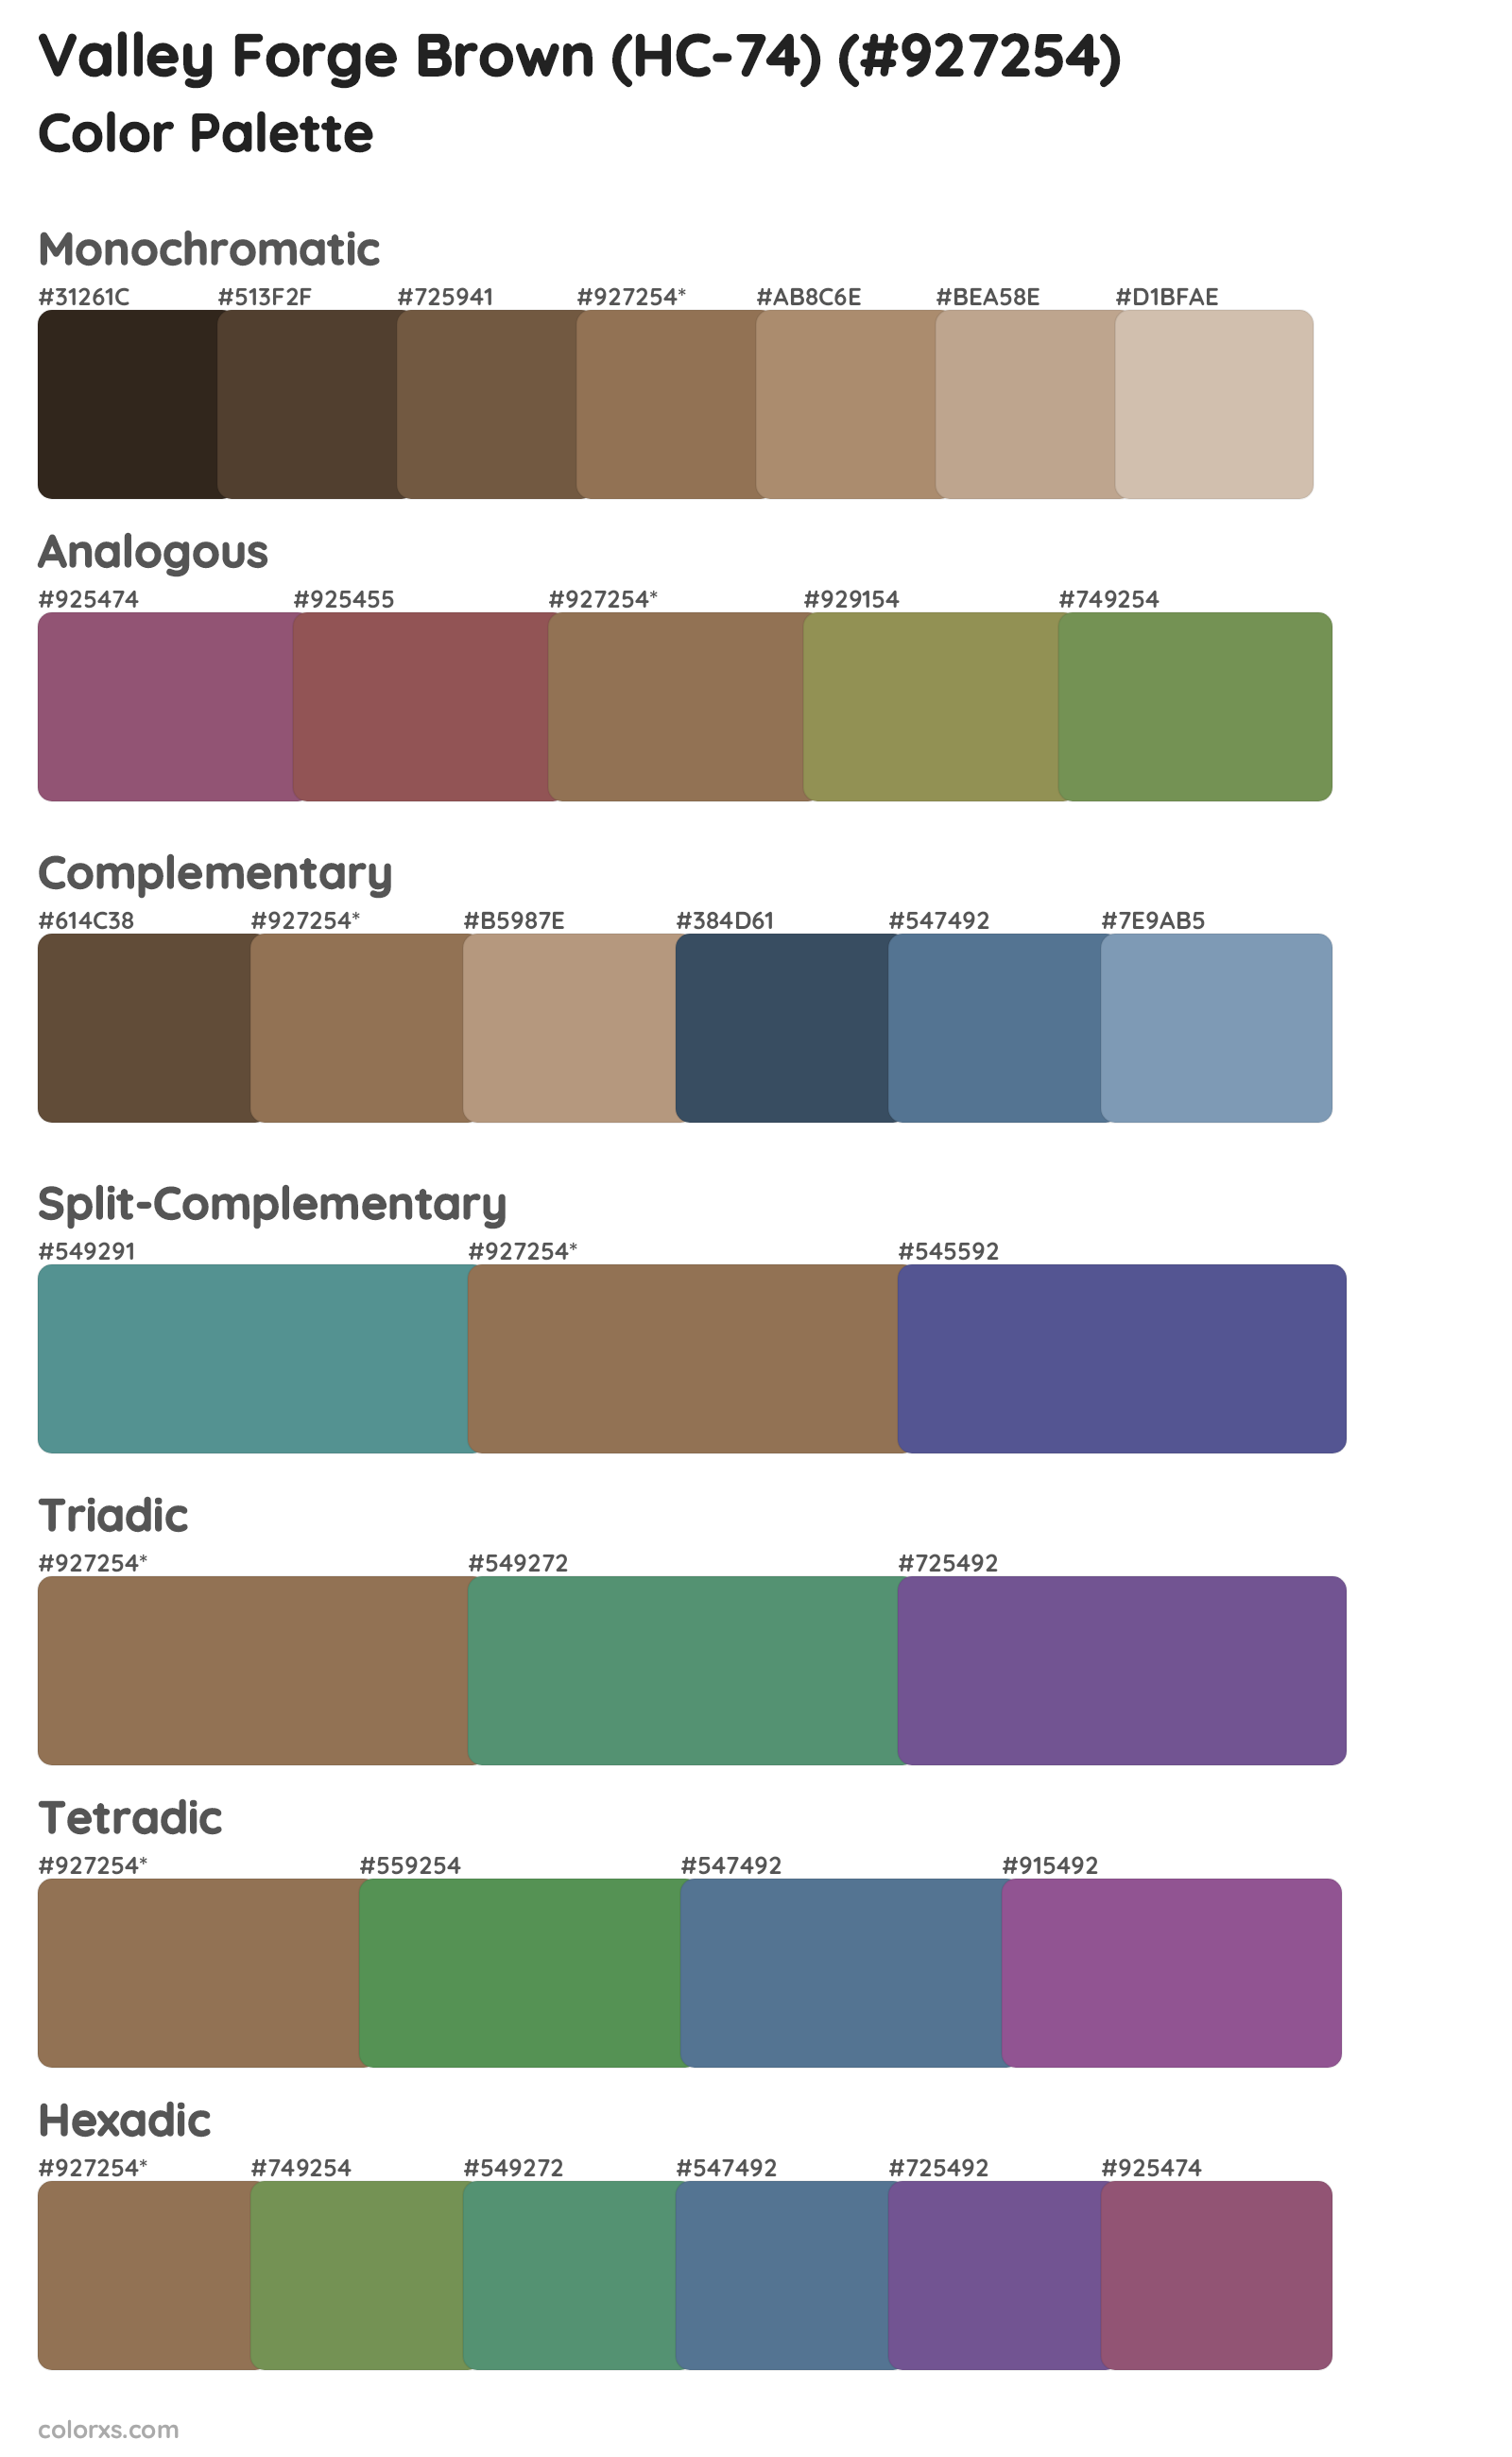 Valley Forge Brown (HC-74) Color Scheme Palettes